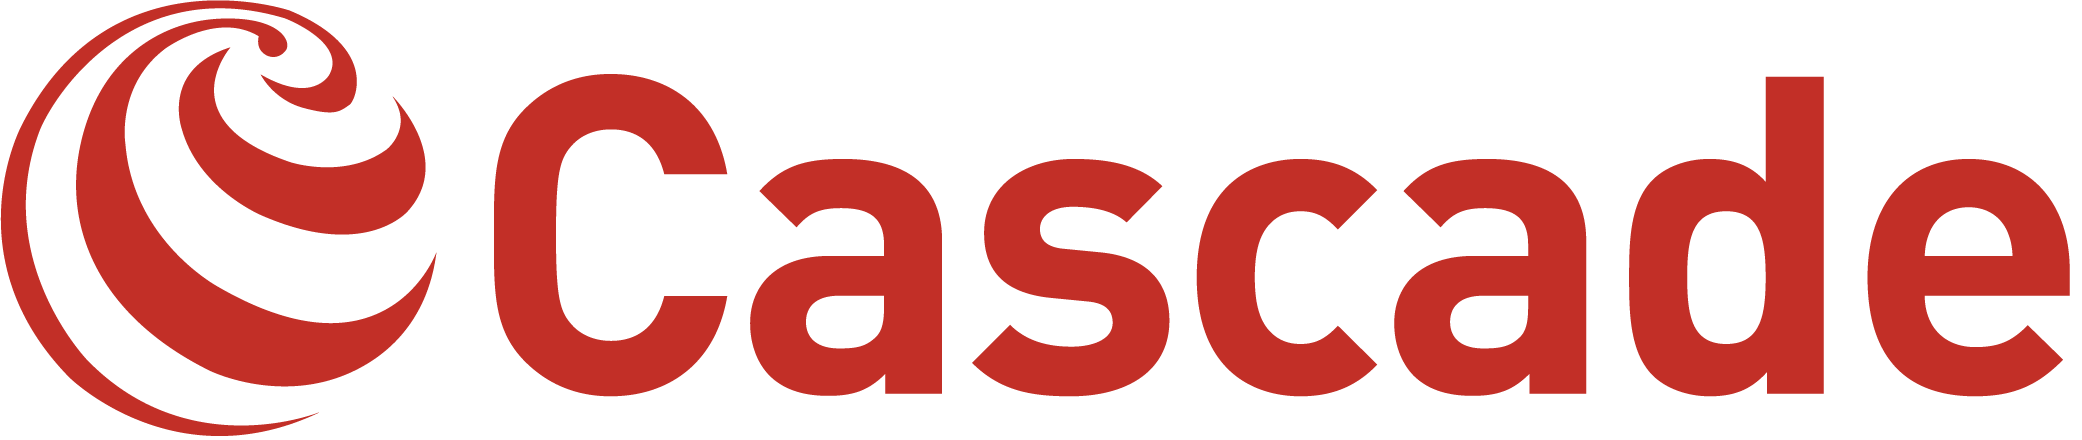 Cascade логотип. Cascade logo. Logo Cascade без фона. Cascad conslatance. Cascad